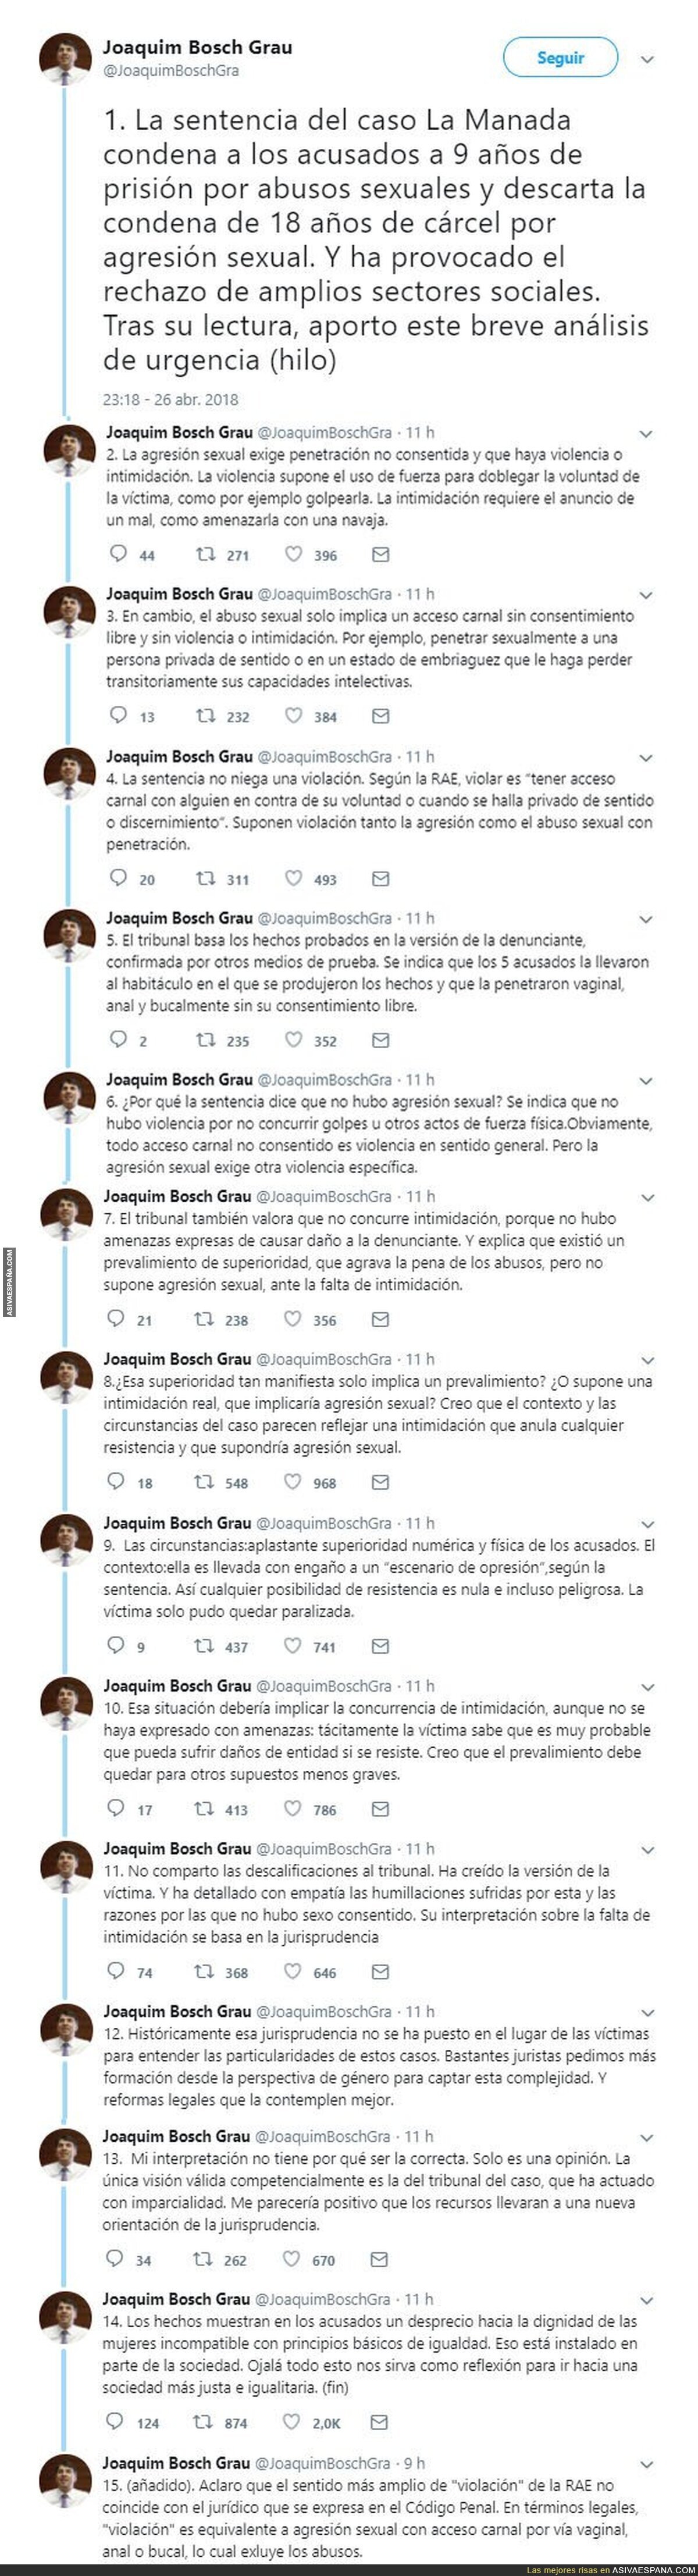 Joaquim Bosch sobre la sentencia de la La Manada